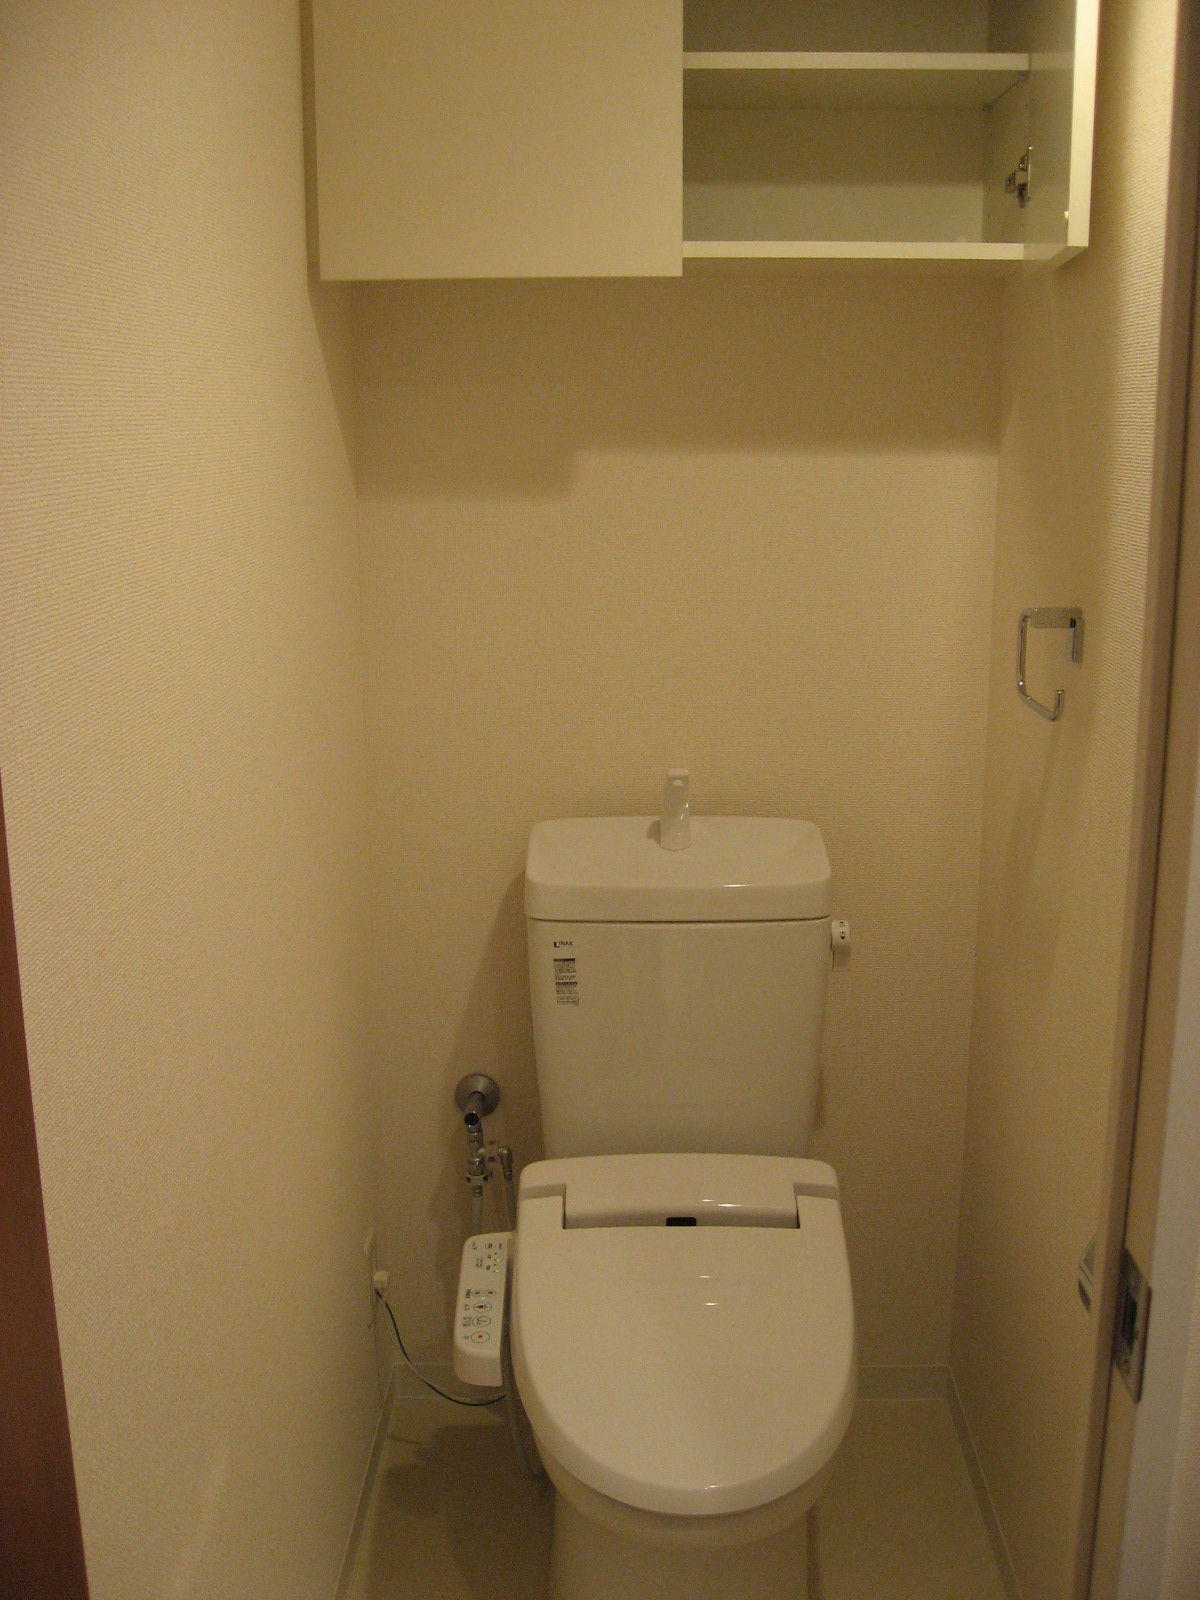 Toilet. Bidet ・ With hanging cupboard